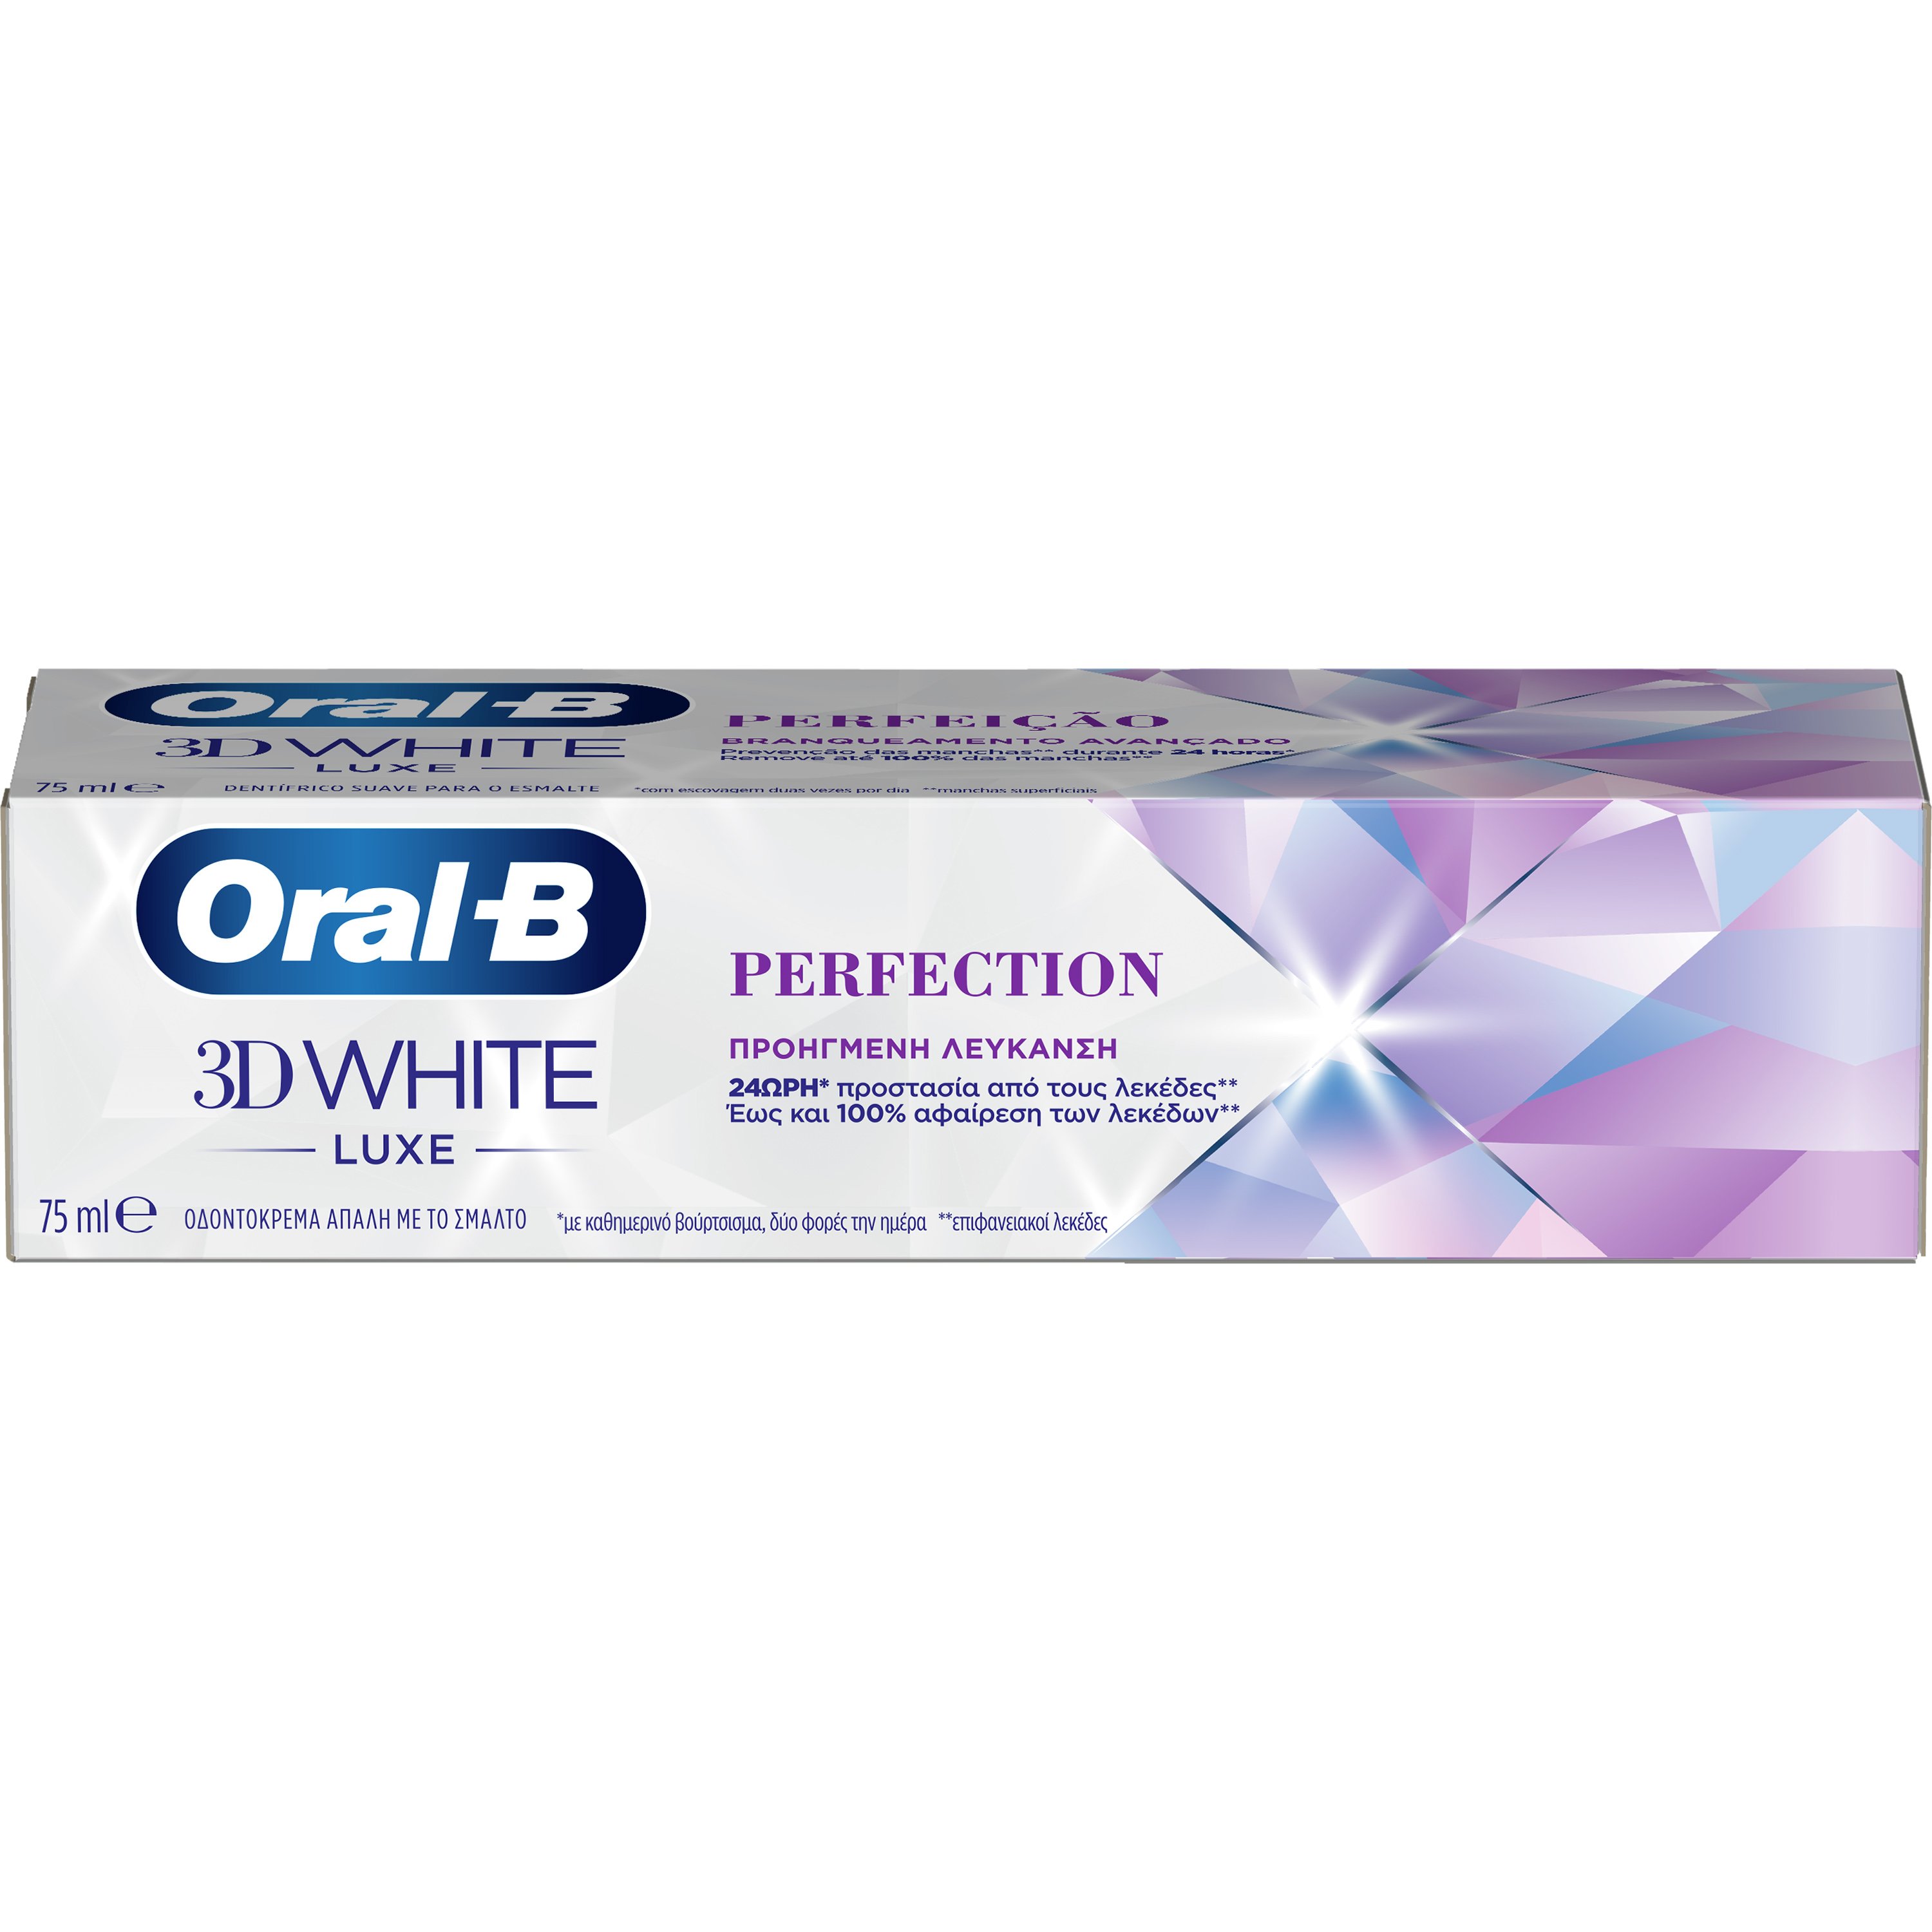 Oral-B 3D White Advanced Luxe Perfection Toothpaste Οδοντόκρεμα Προηγμένης Λεύκανσης για Προστασία από τους Λεκέδες Έως & 24 Ώρες με Γεύση Δροσερής Μέντας 75ml 11983